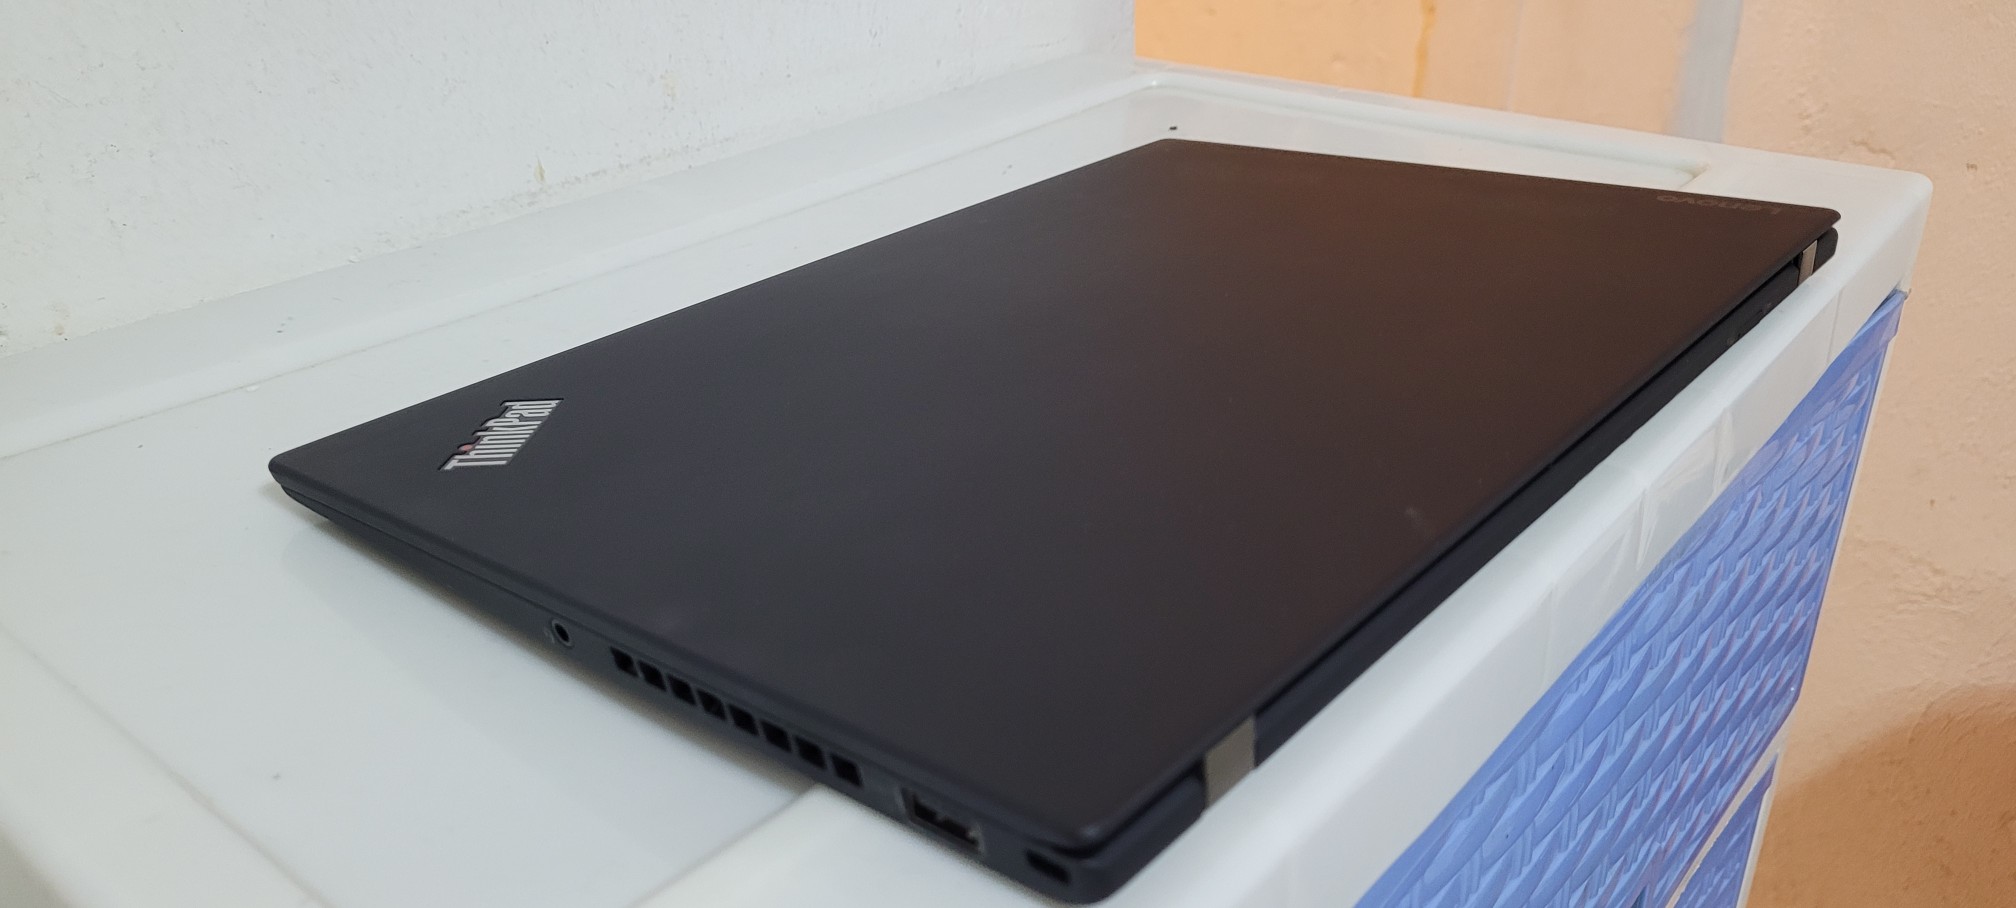 computadoras y laptops - Lenovo X1 Carbon 14 Pulg Core i7 Ram 16gb ddr4 Disco 512gb Solido full  2